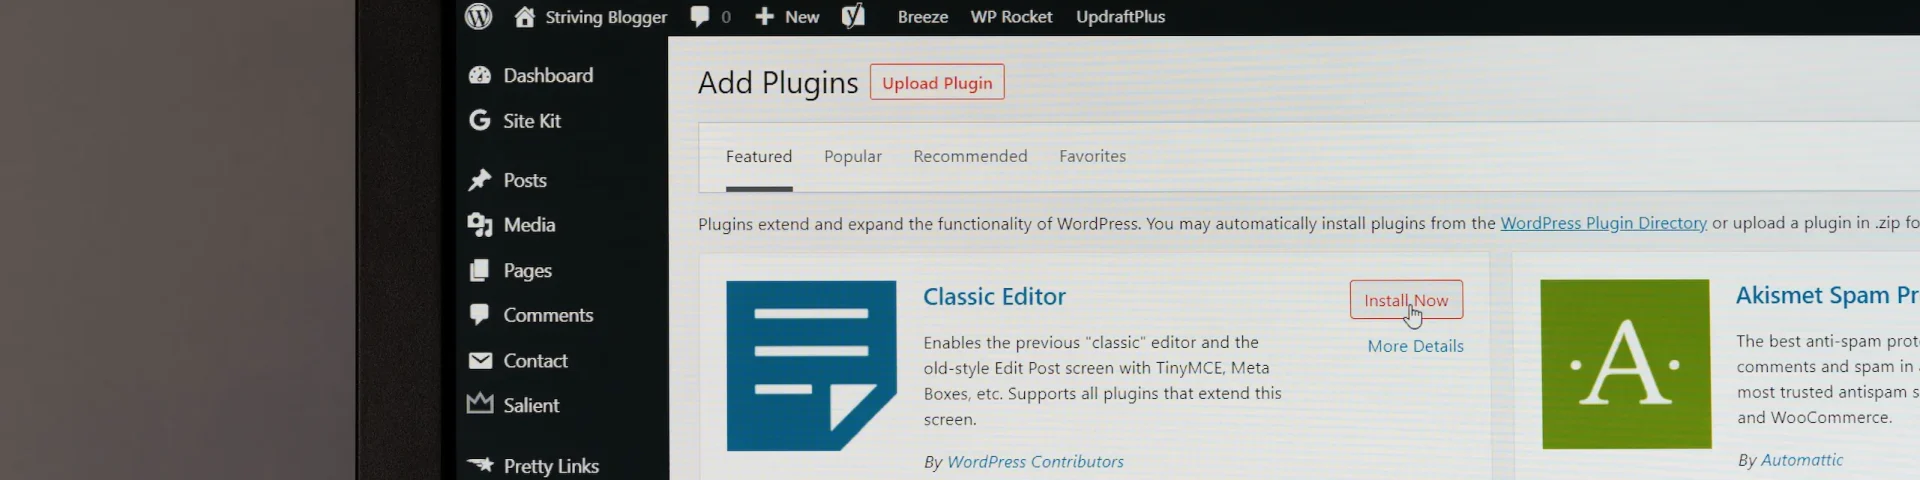 Add Plugins page on WordPress - Wordpress Website Development